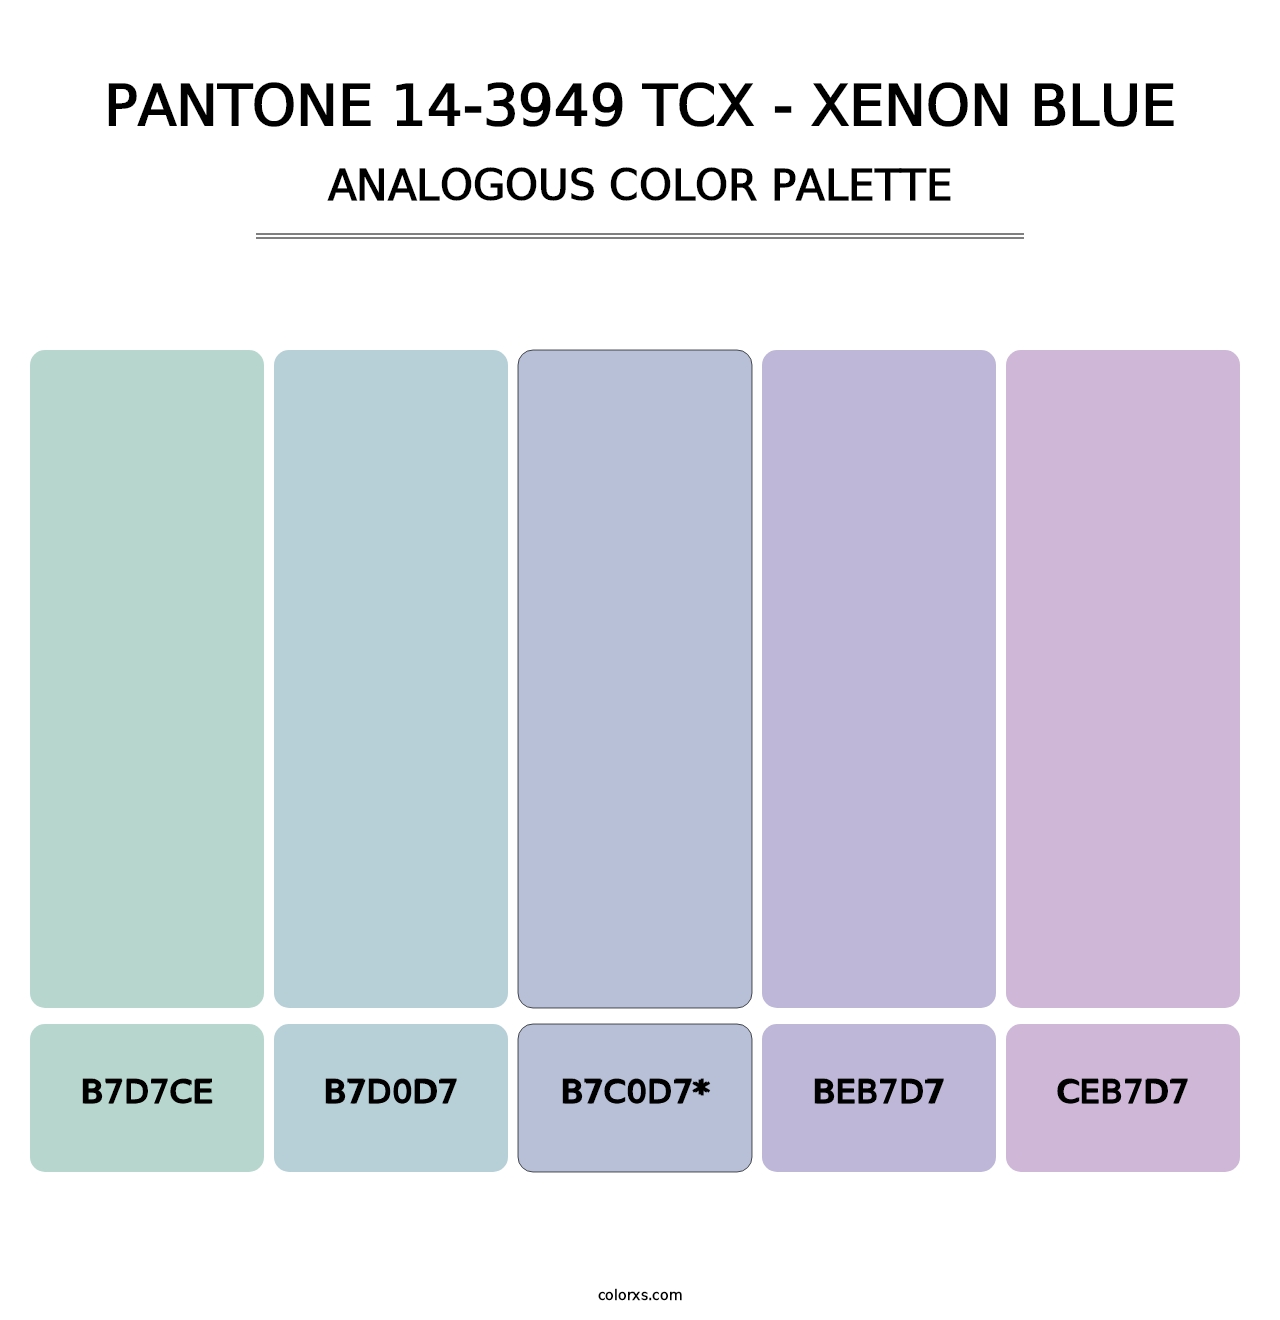 PANTONE 14-3949 TCX - Xenon Blue - Analogous Color Palette